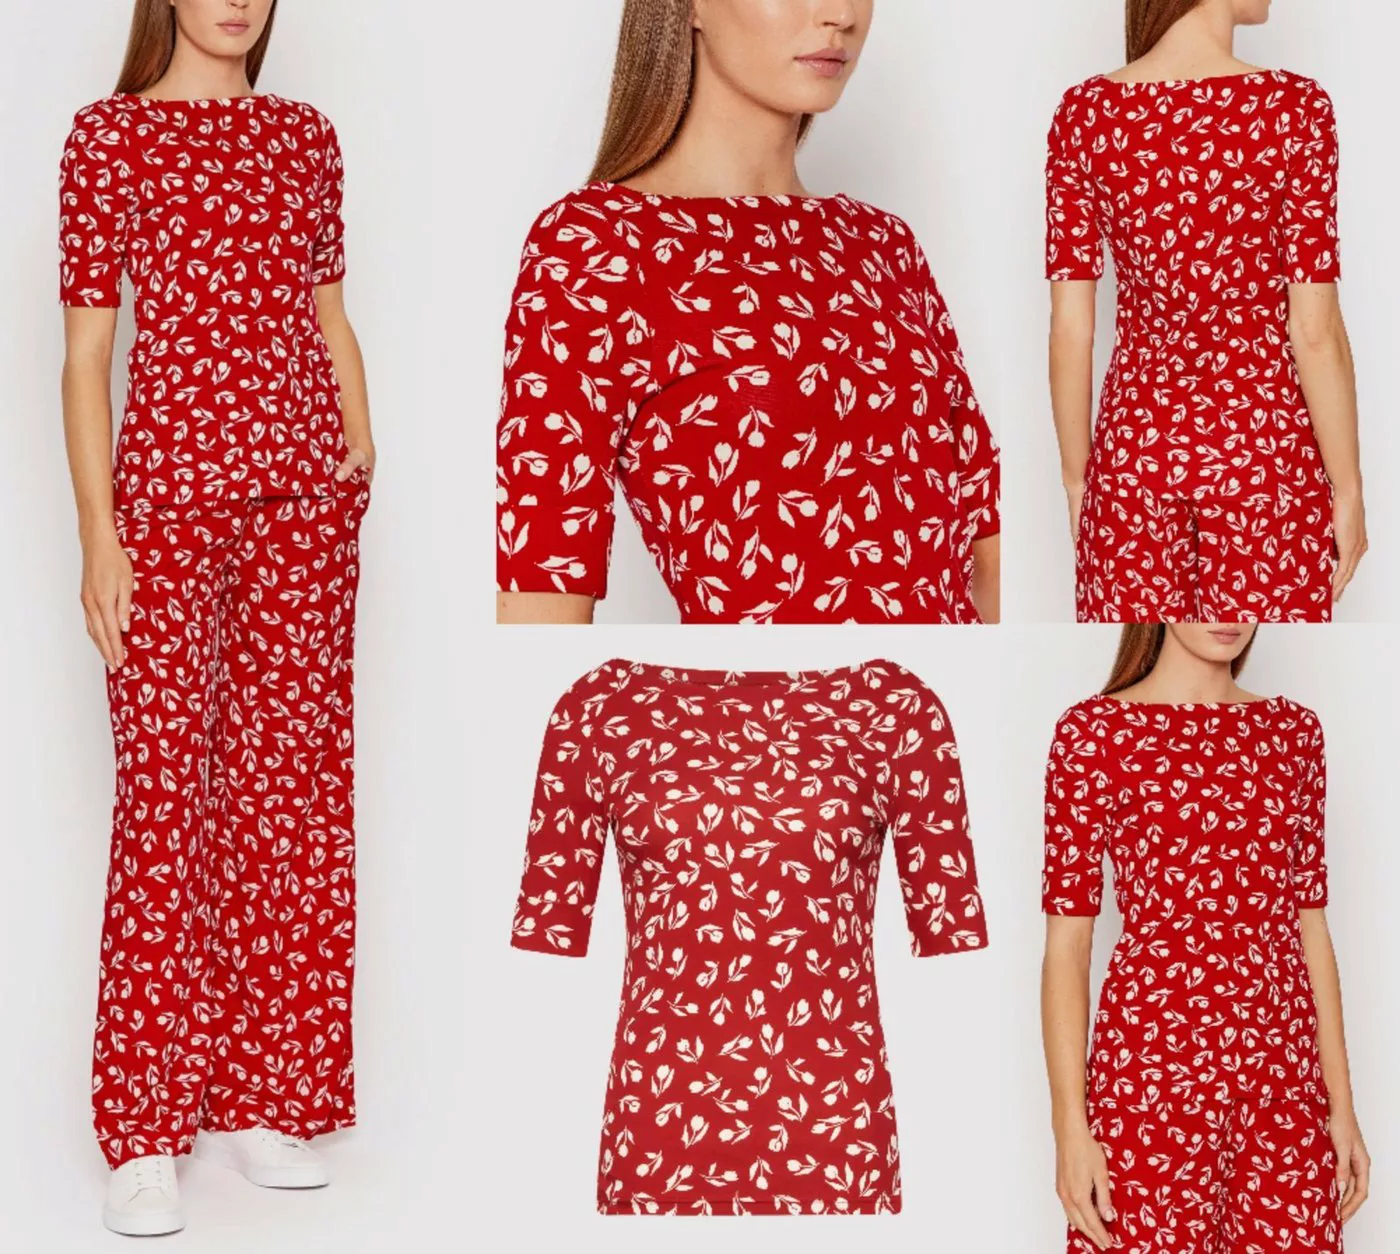 Ralph Lauren T-Shirt LAUREN RALPH LAUREN Floral Pattern Blouse Hemd Blusent günstig online kaufen